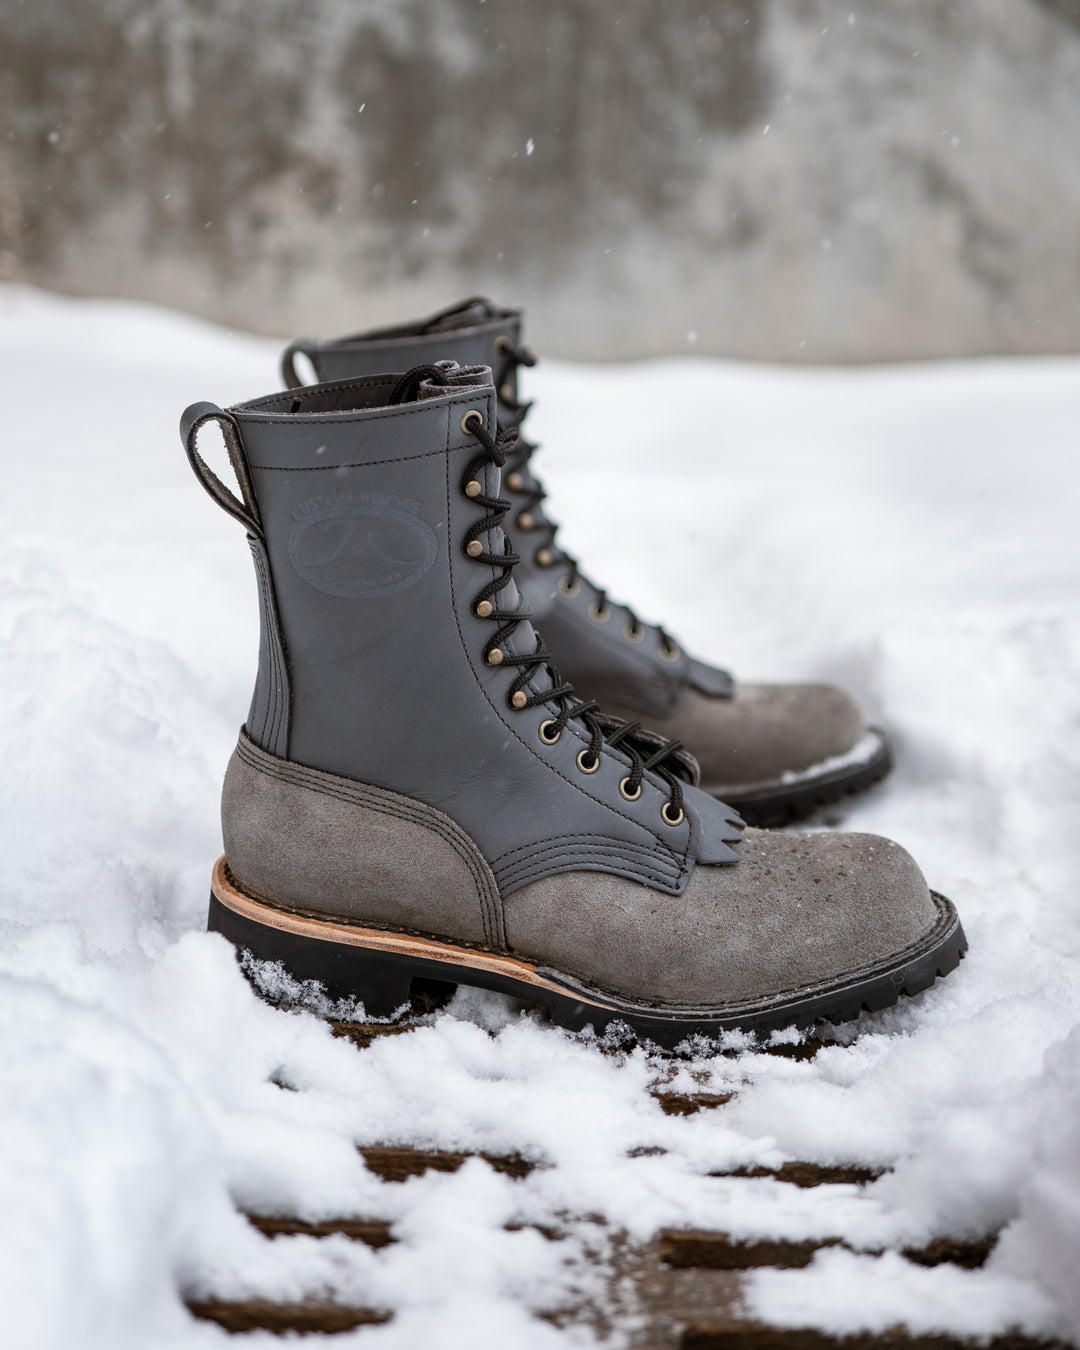 3 Tips for Better Winter Boot Care